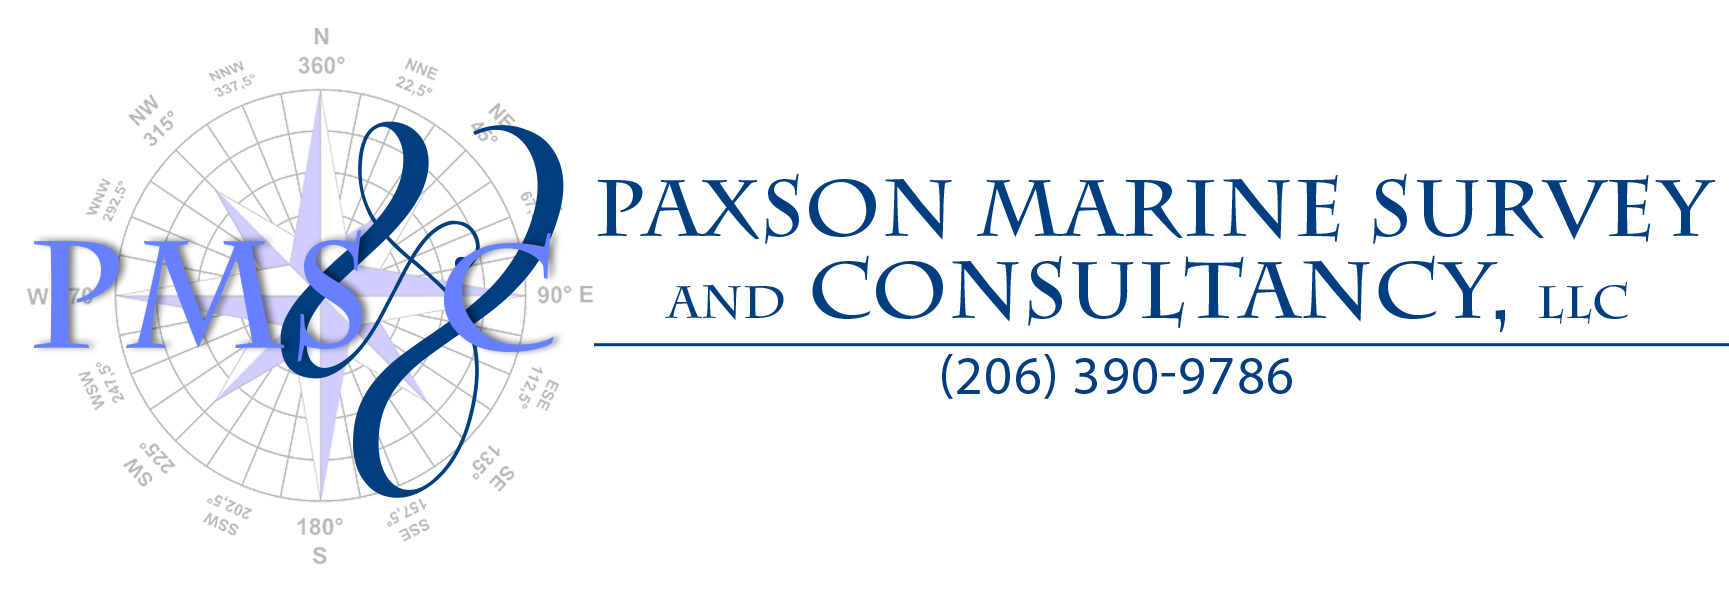 Paxson Marine Survey